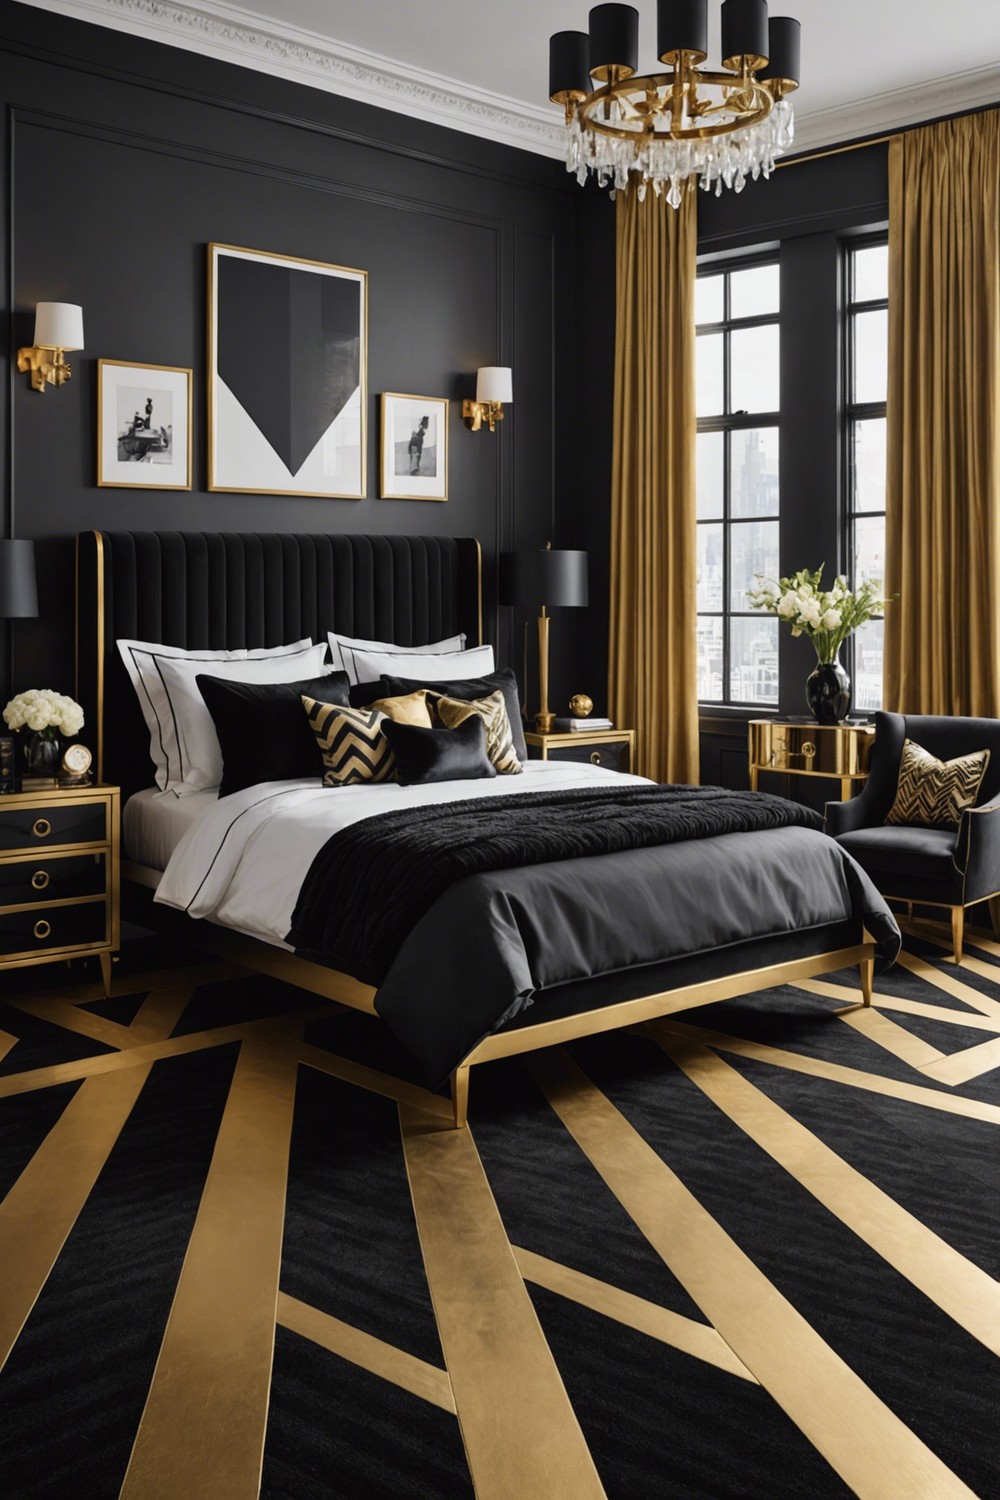 Black and Gold Herringbone Patterned Flooring